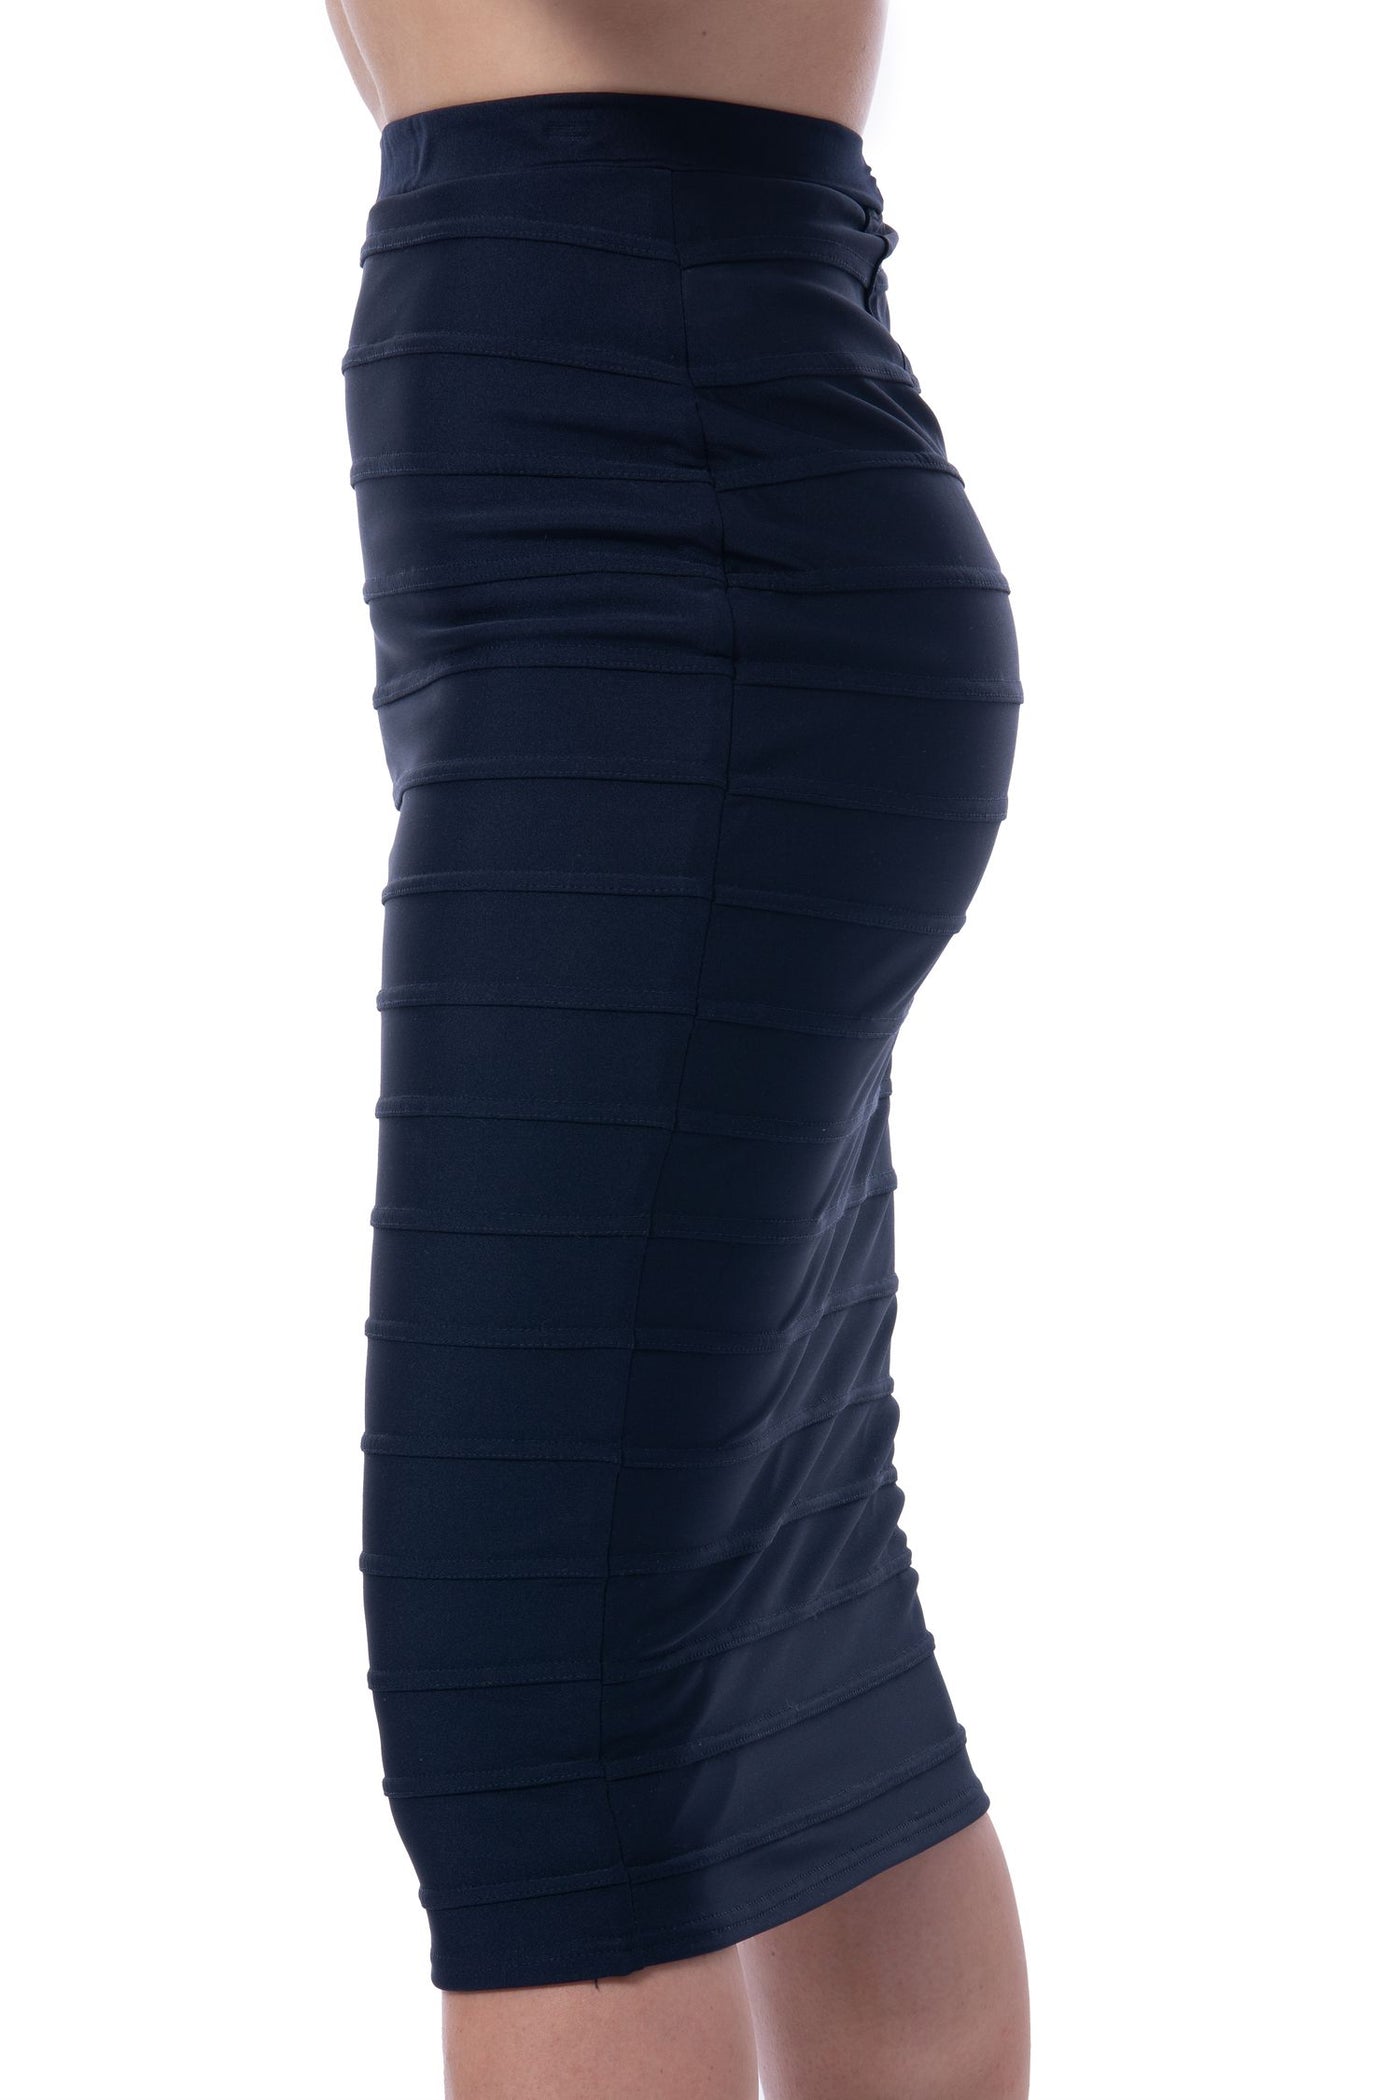 Catwalk Collection Black Bandage Bodycon Skirt